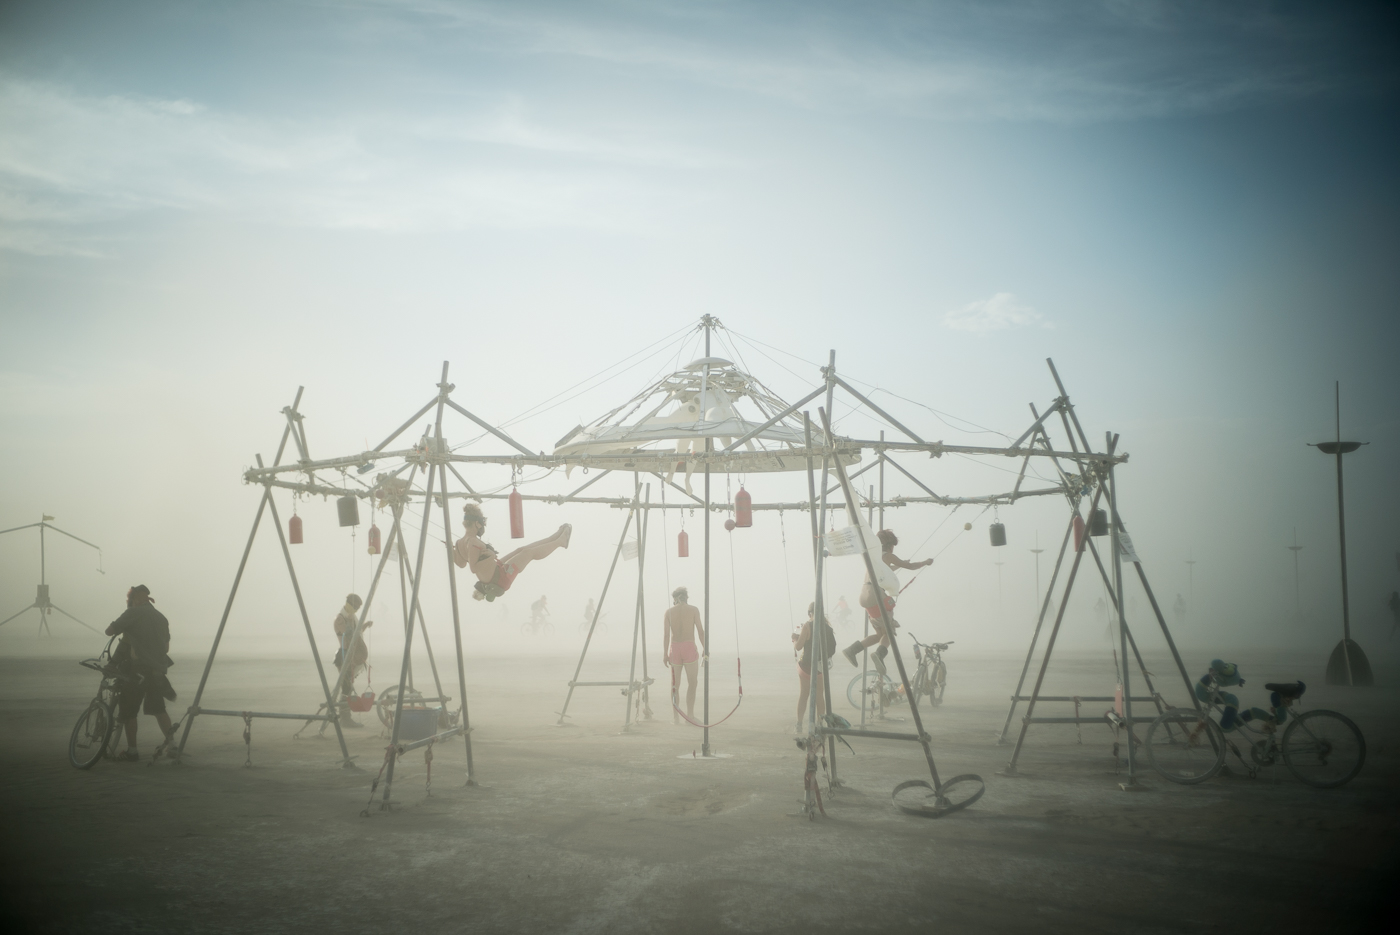 Musical Swingset, Burning Man 2014: In Dust We Trust - Photos of a Dusty Playa